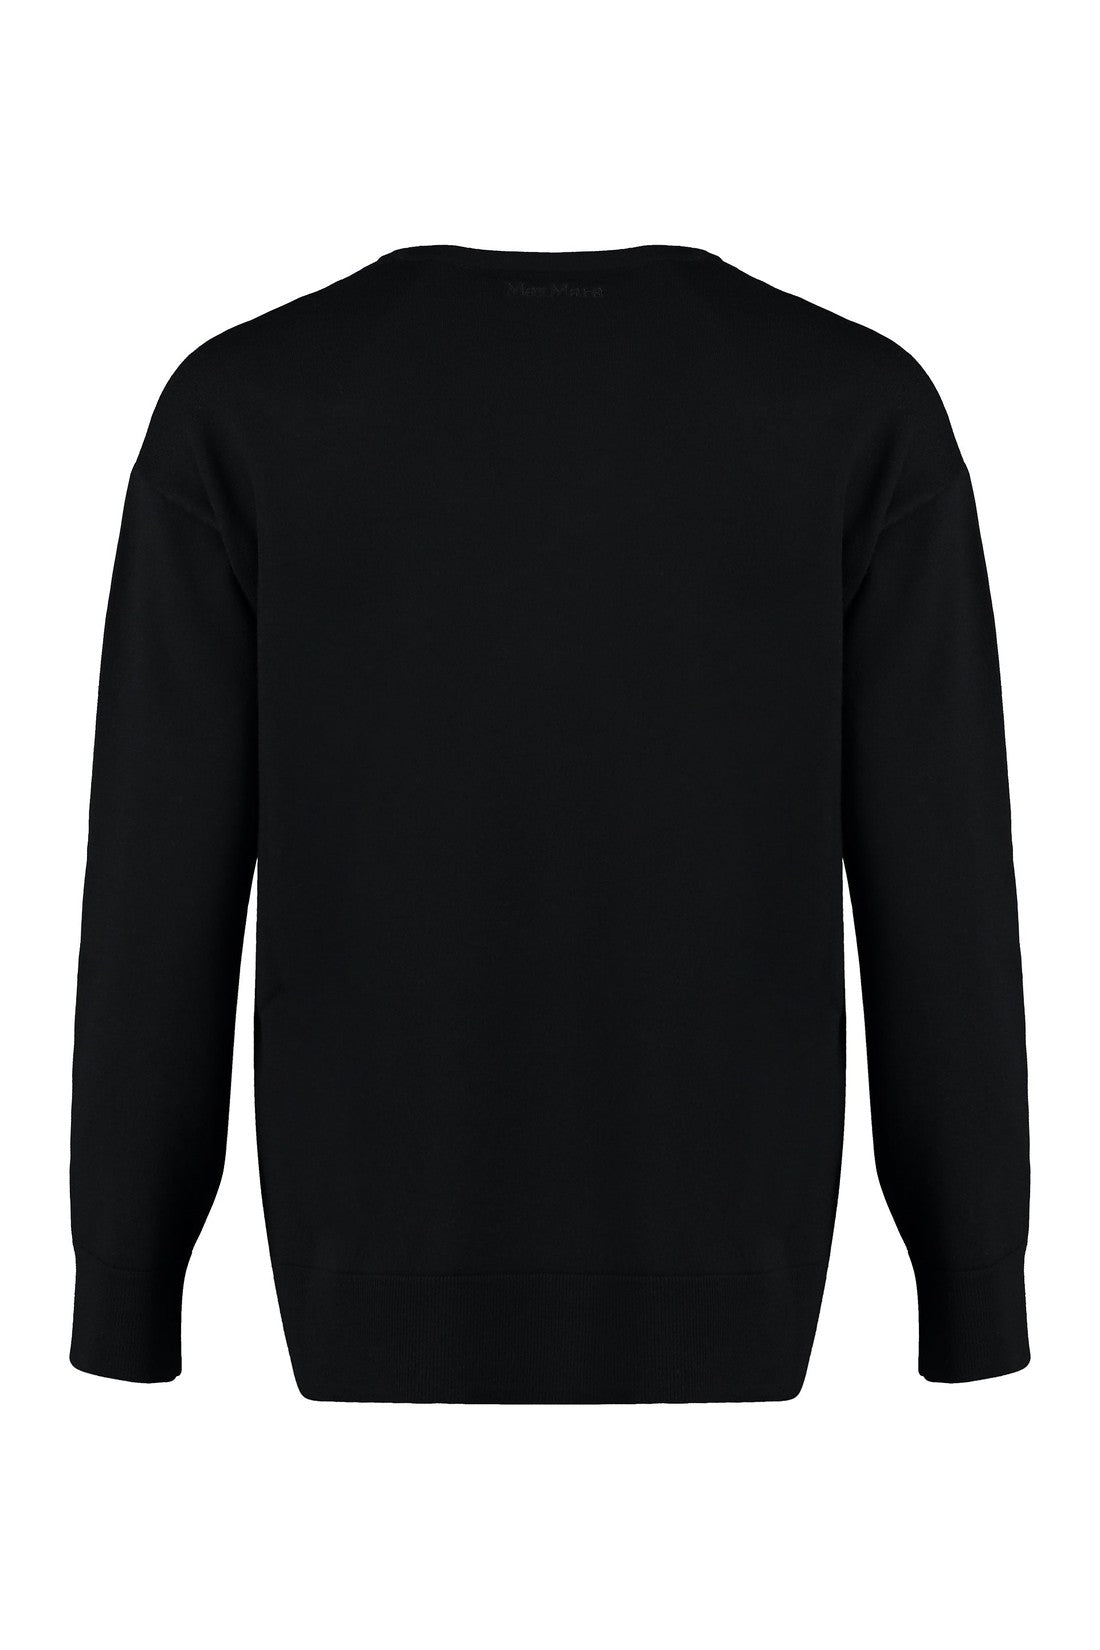 S MAX MARA-OUTLET-SALE-Amburgo crew-neck sweater-ARCHIVIST